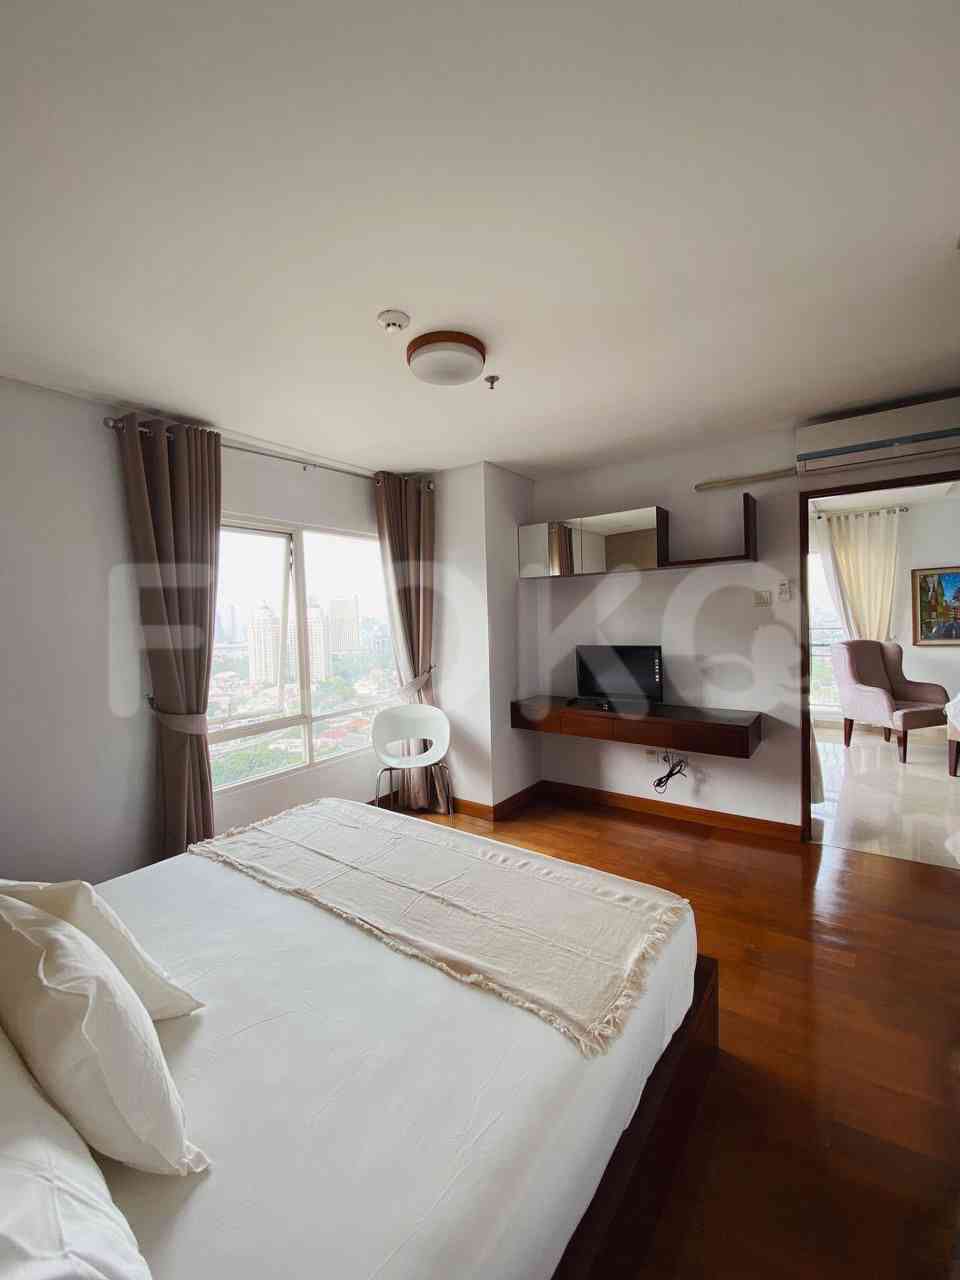 4 Bedroom on 26th Floor for Rent in Permata Hijau Suites Apartment - fpeb05 13